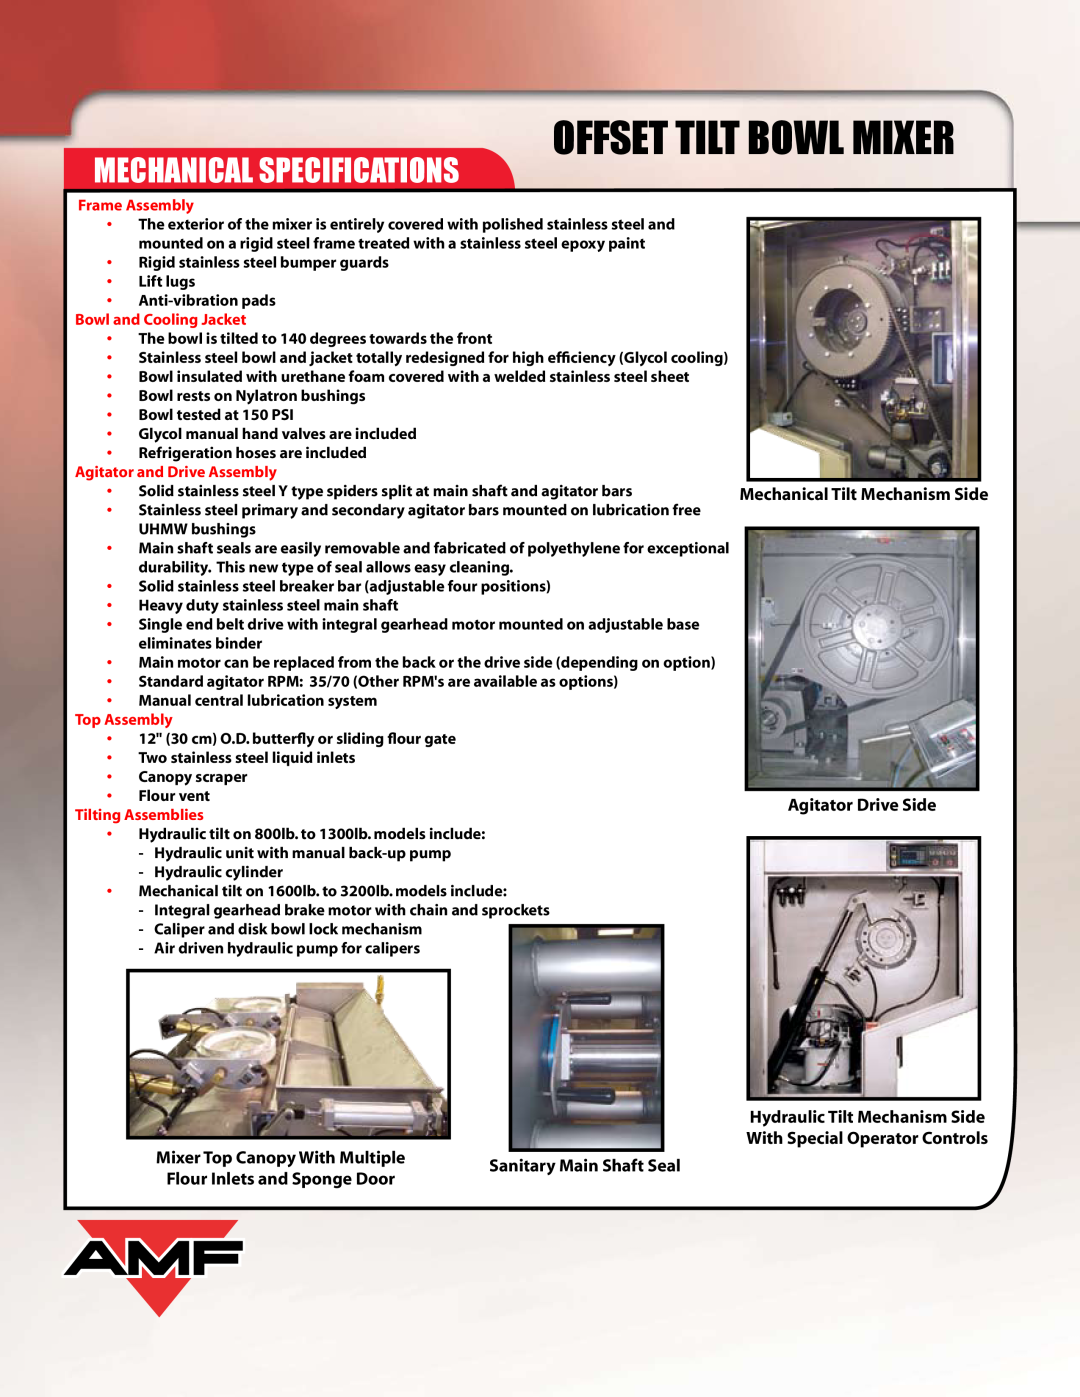 AMF Offset Tilt Bowl Mixer (OTBM) manual Mechanical Specifications, Mechanical Tilt Mechanism Side, Agitator Drive Side 